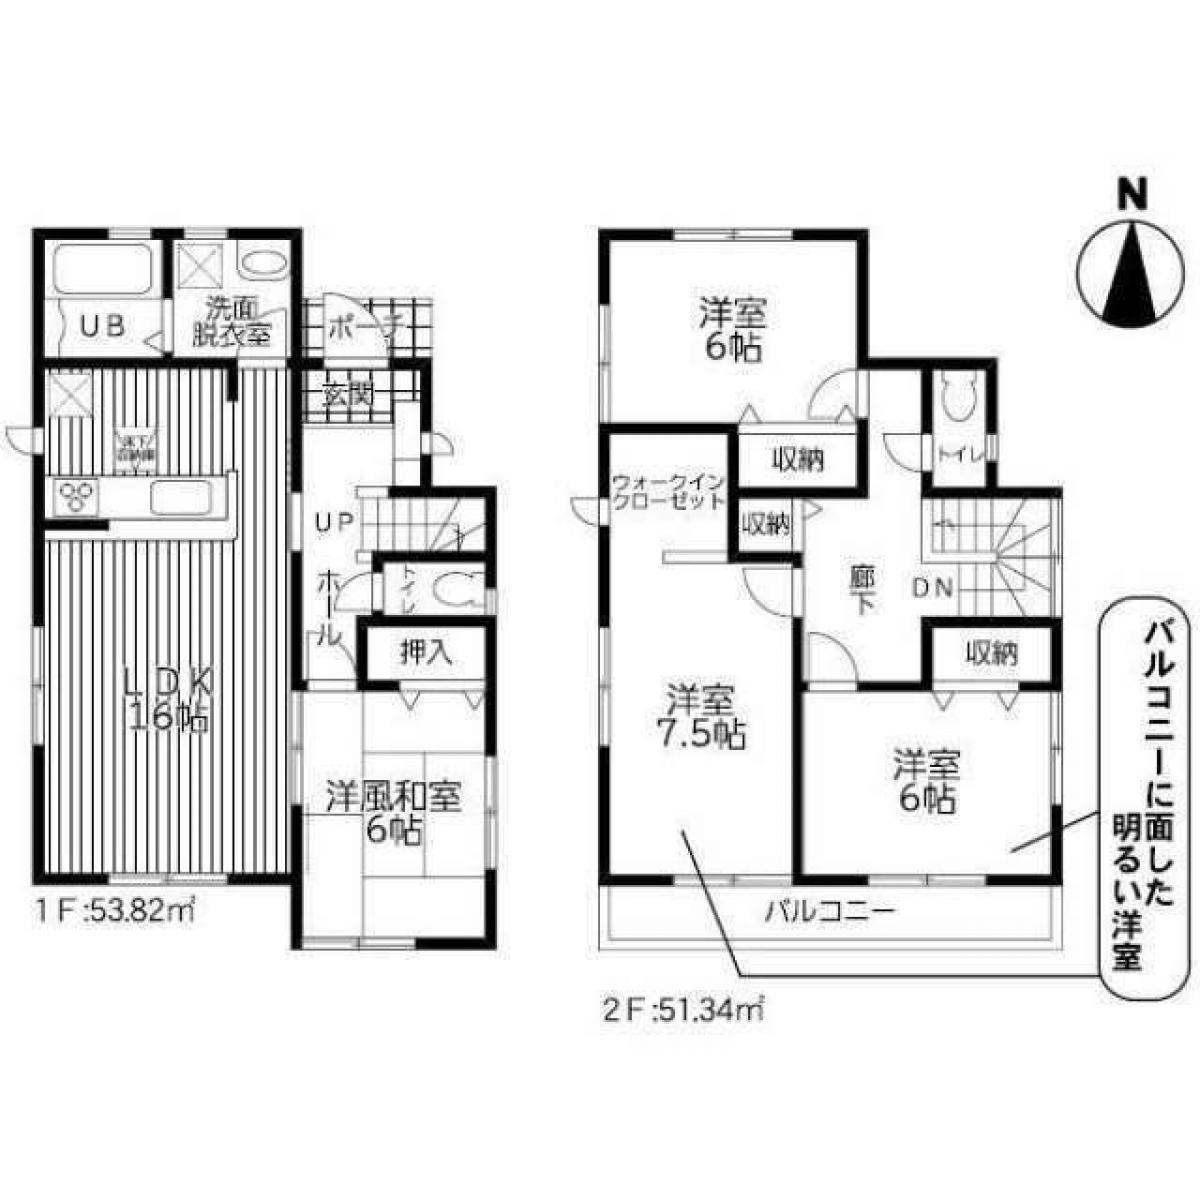 Picture of Home For Sale in Kakuda Shi, Miyagi, Japan